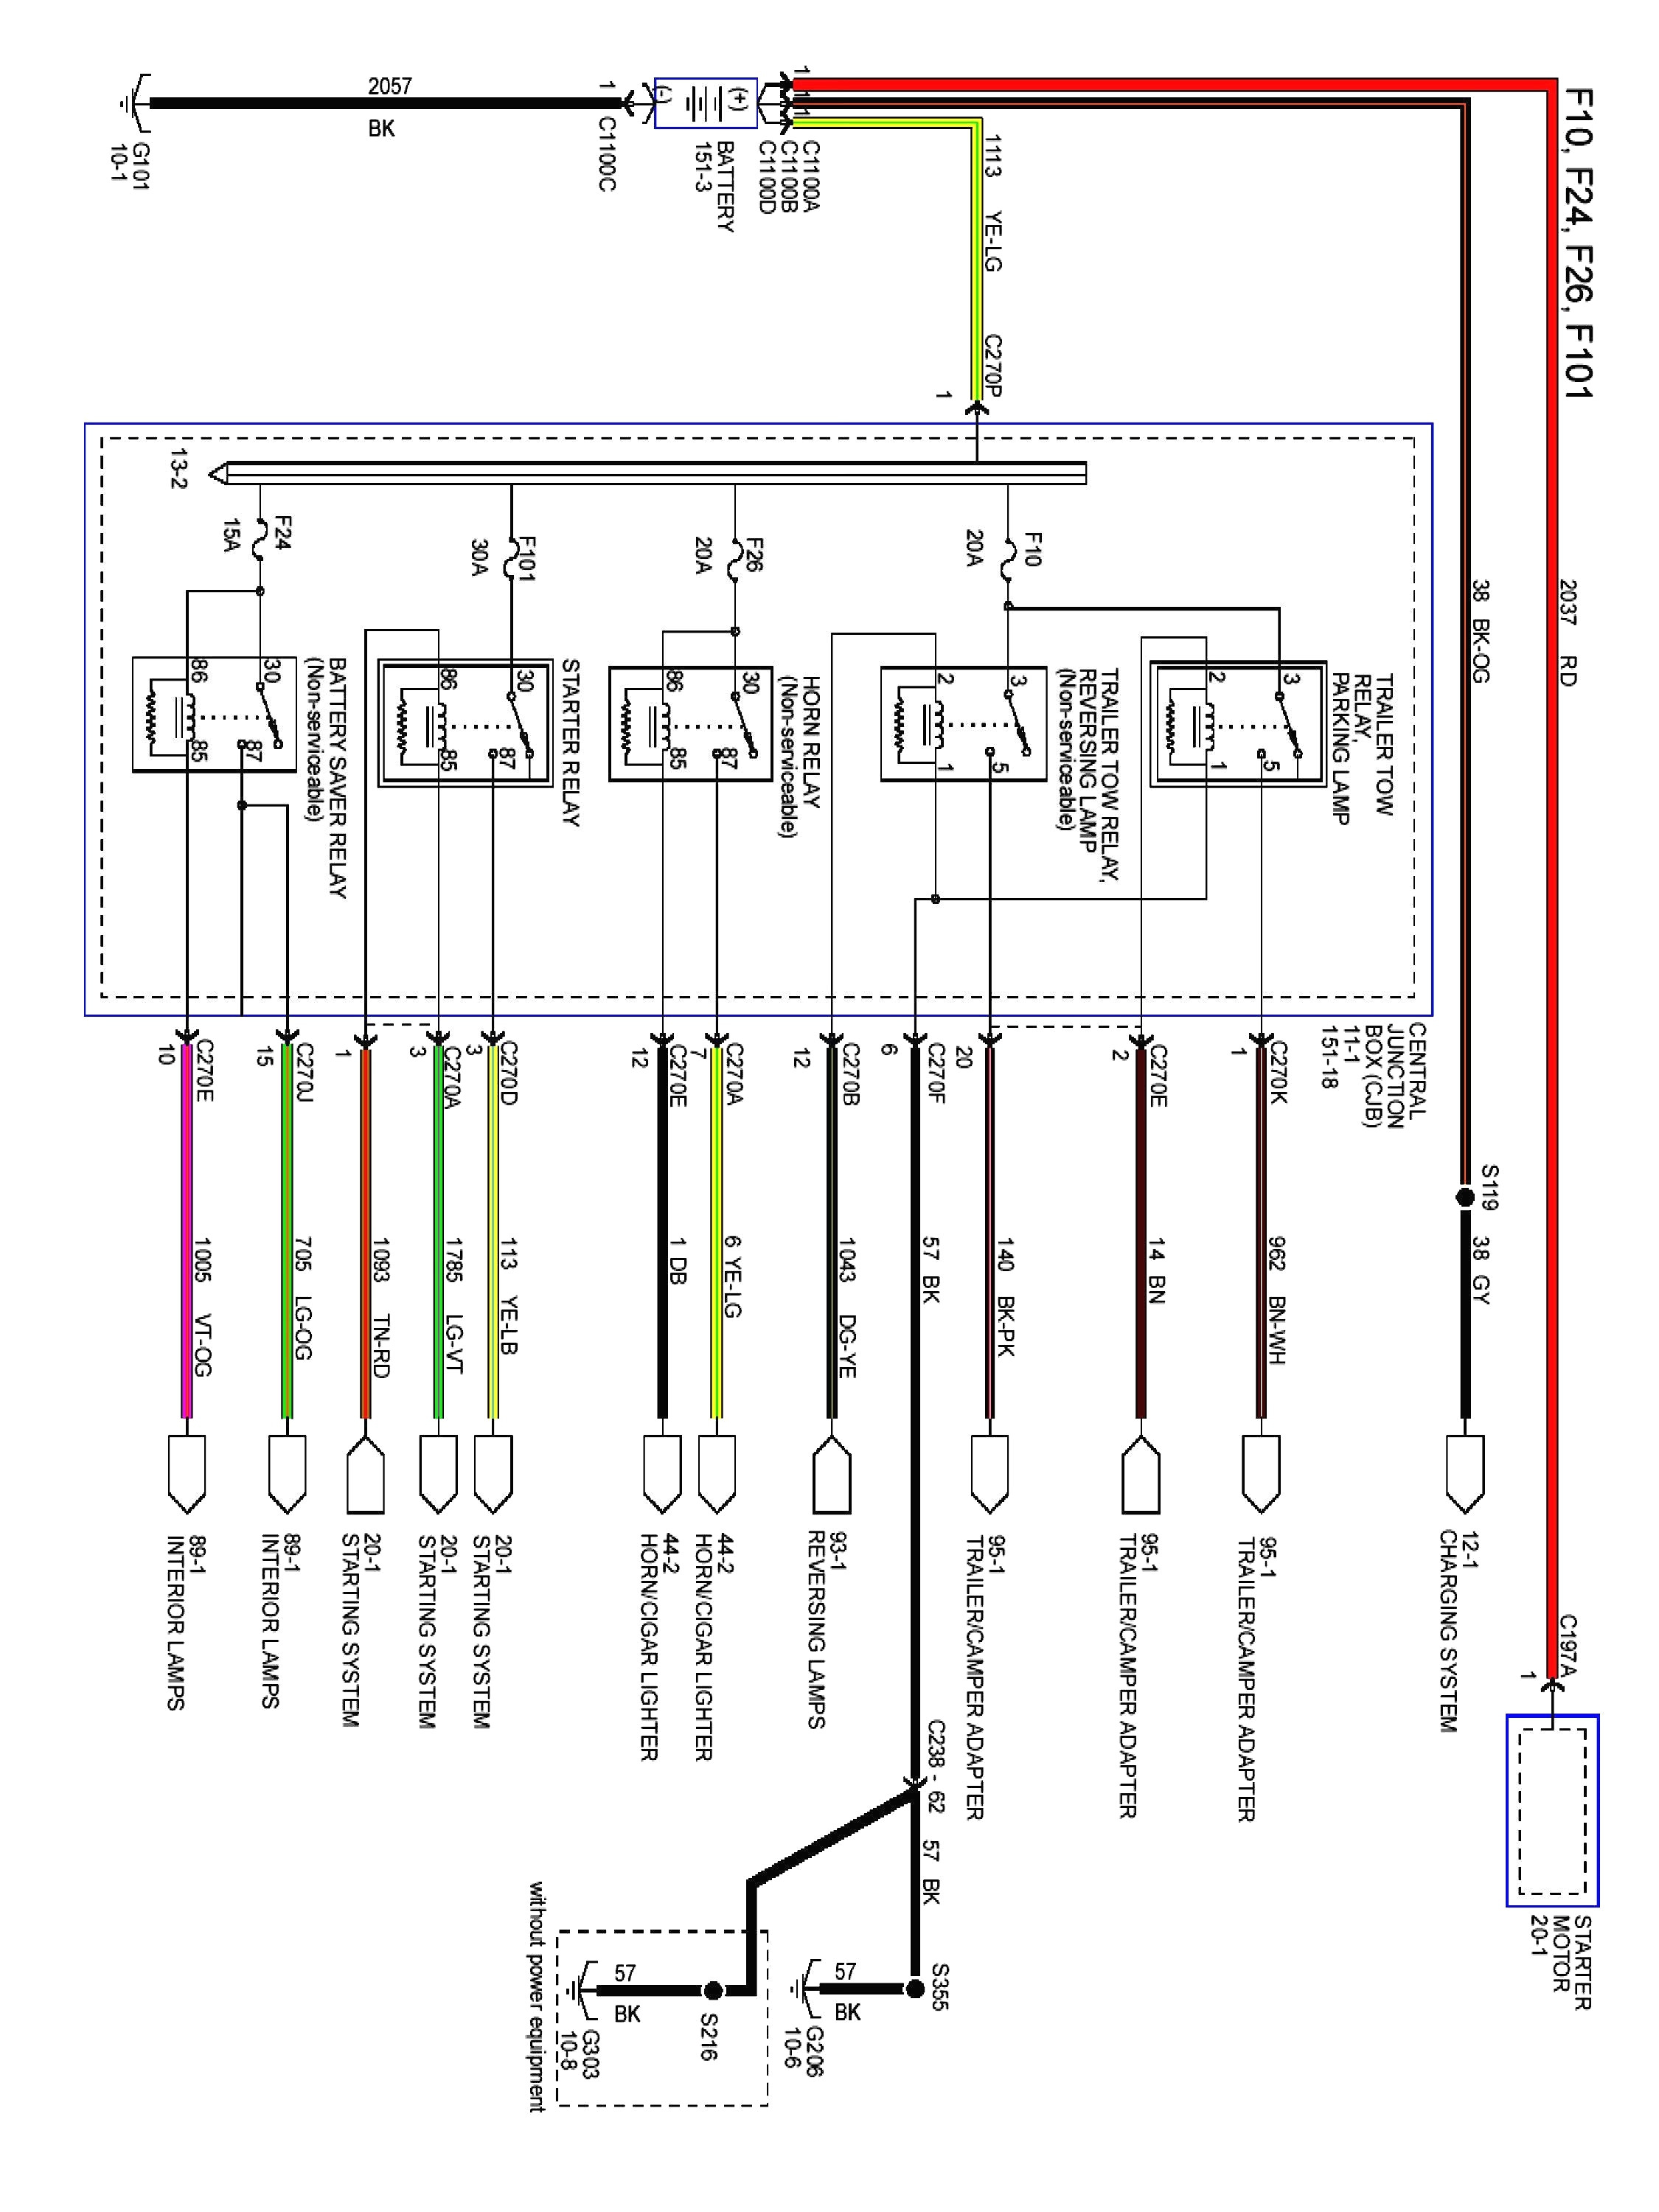 subaru clarion radio wiring diagram wiring diagram mix subaru clarion radio wiring diagram